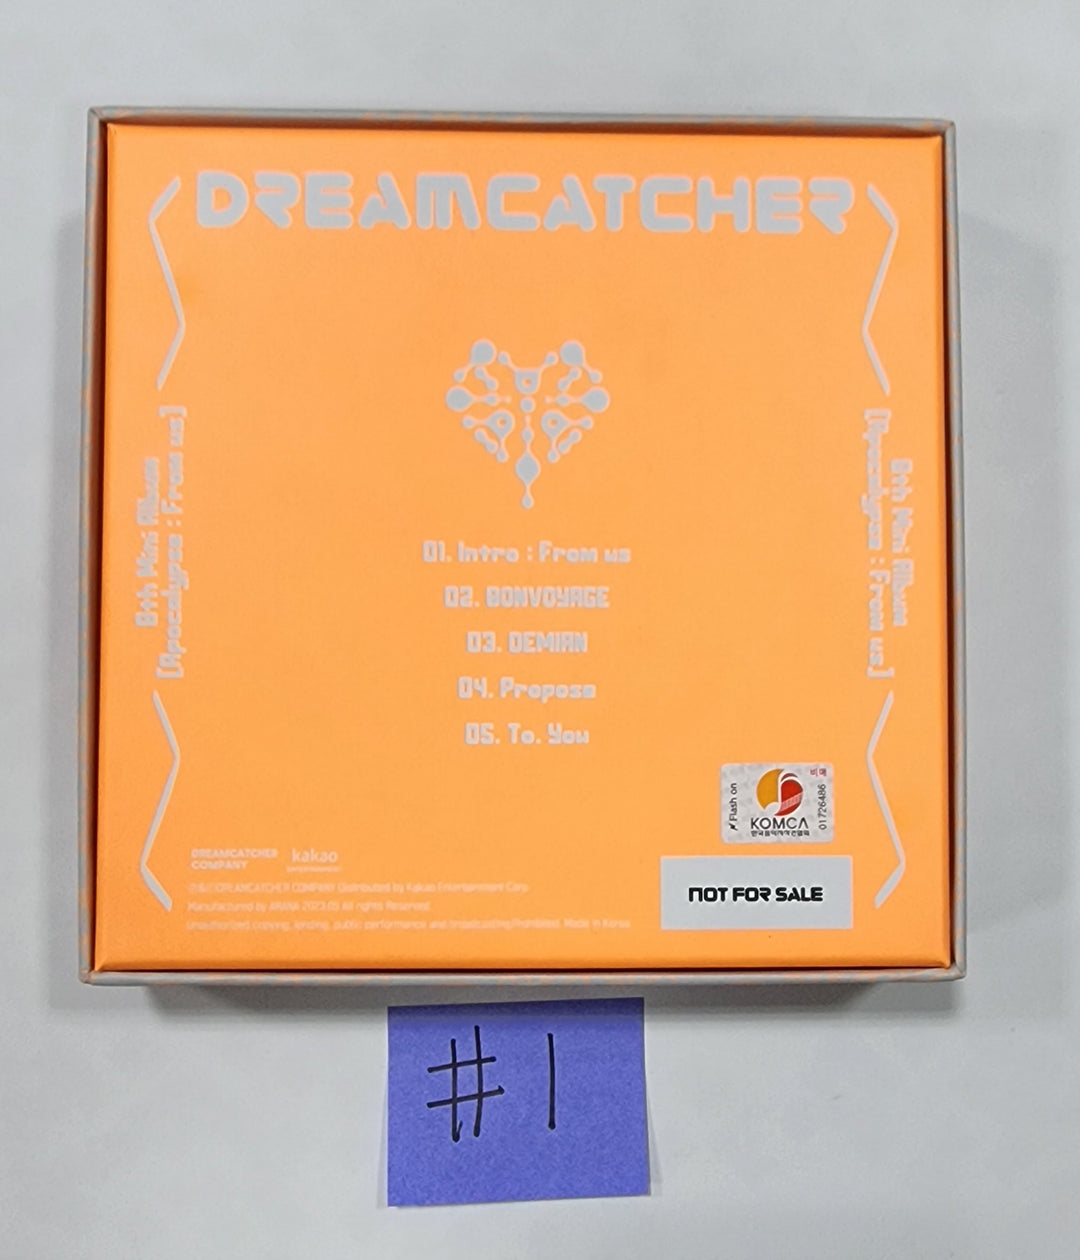 Dreamcatcher "Apocalypse : From us" - Hand Autographed(Signed) Promo Album